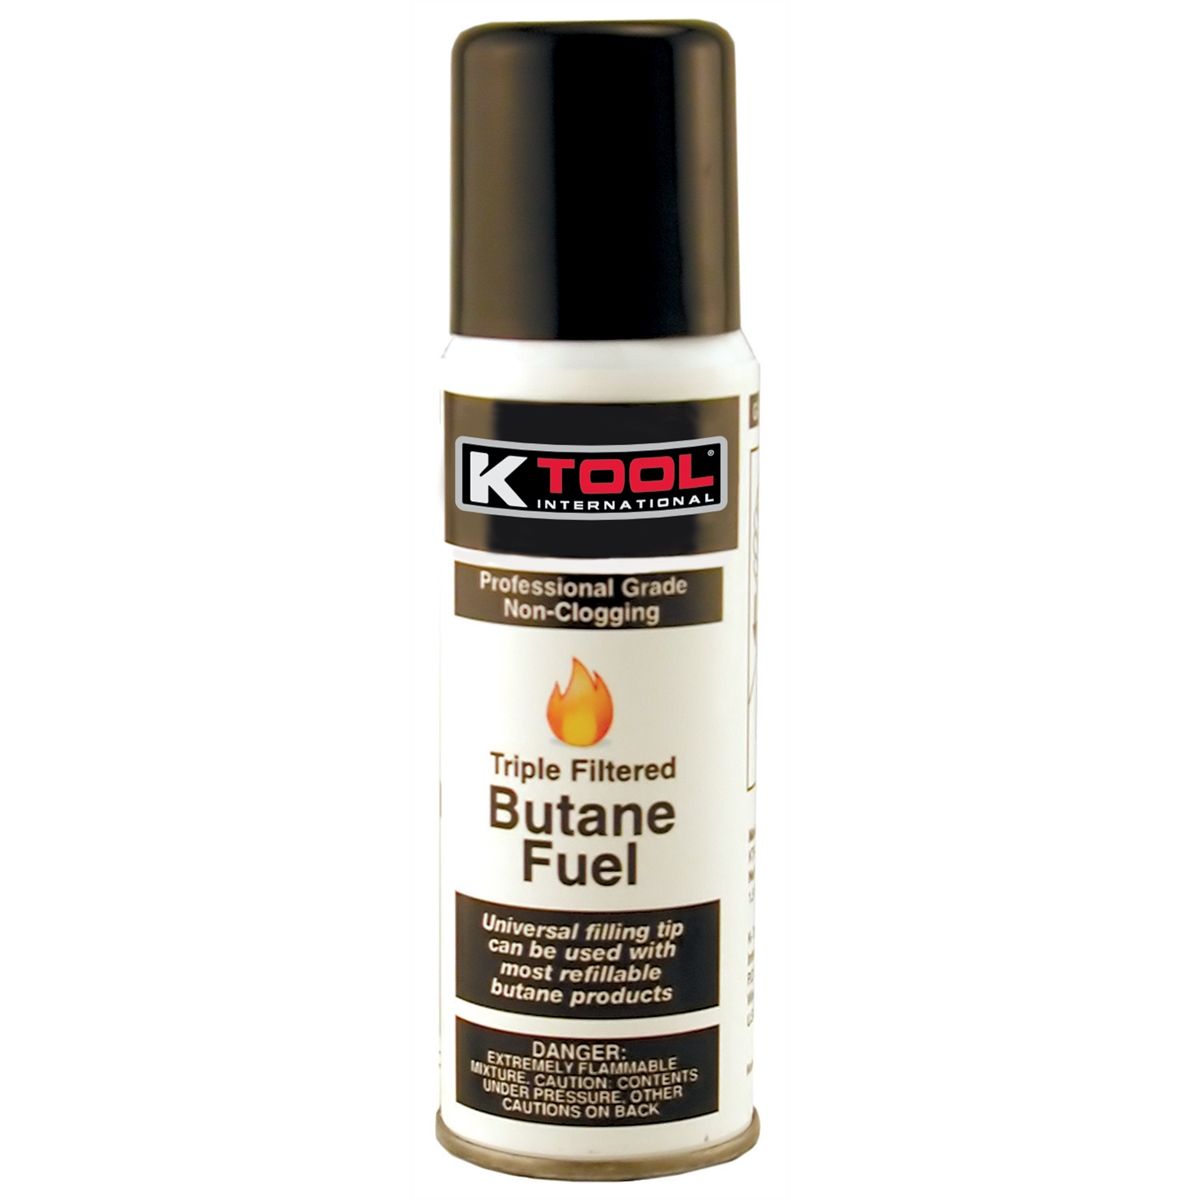 Professional-grade butane fuel